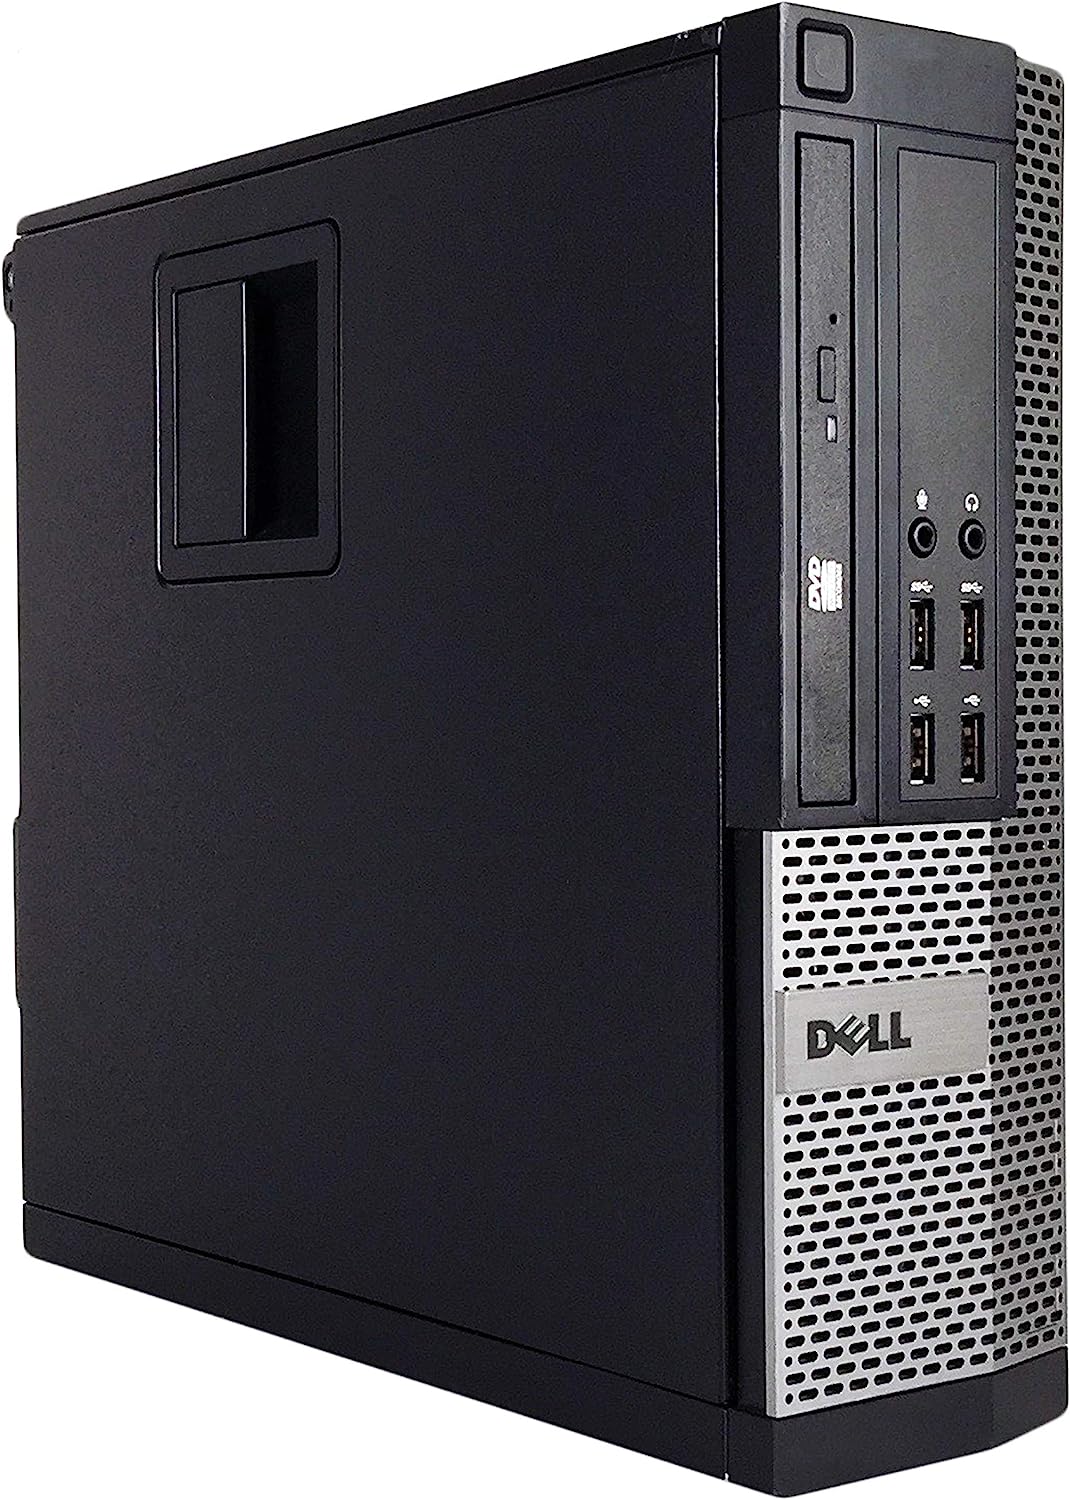 Grade A - Dell OptiPlex 7010 SFF Desktop i7-3770 8GB 240GB SSD